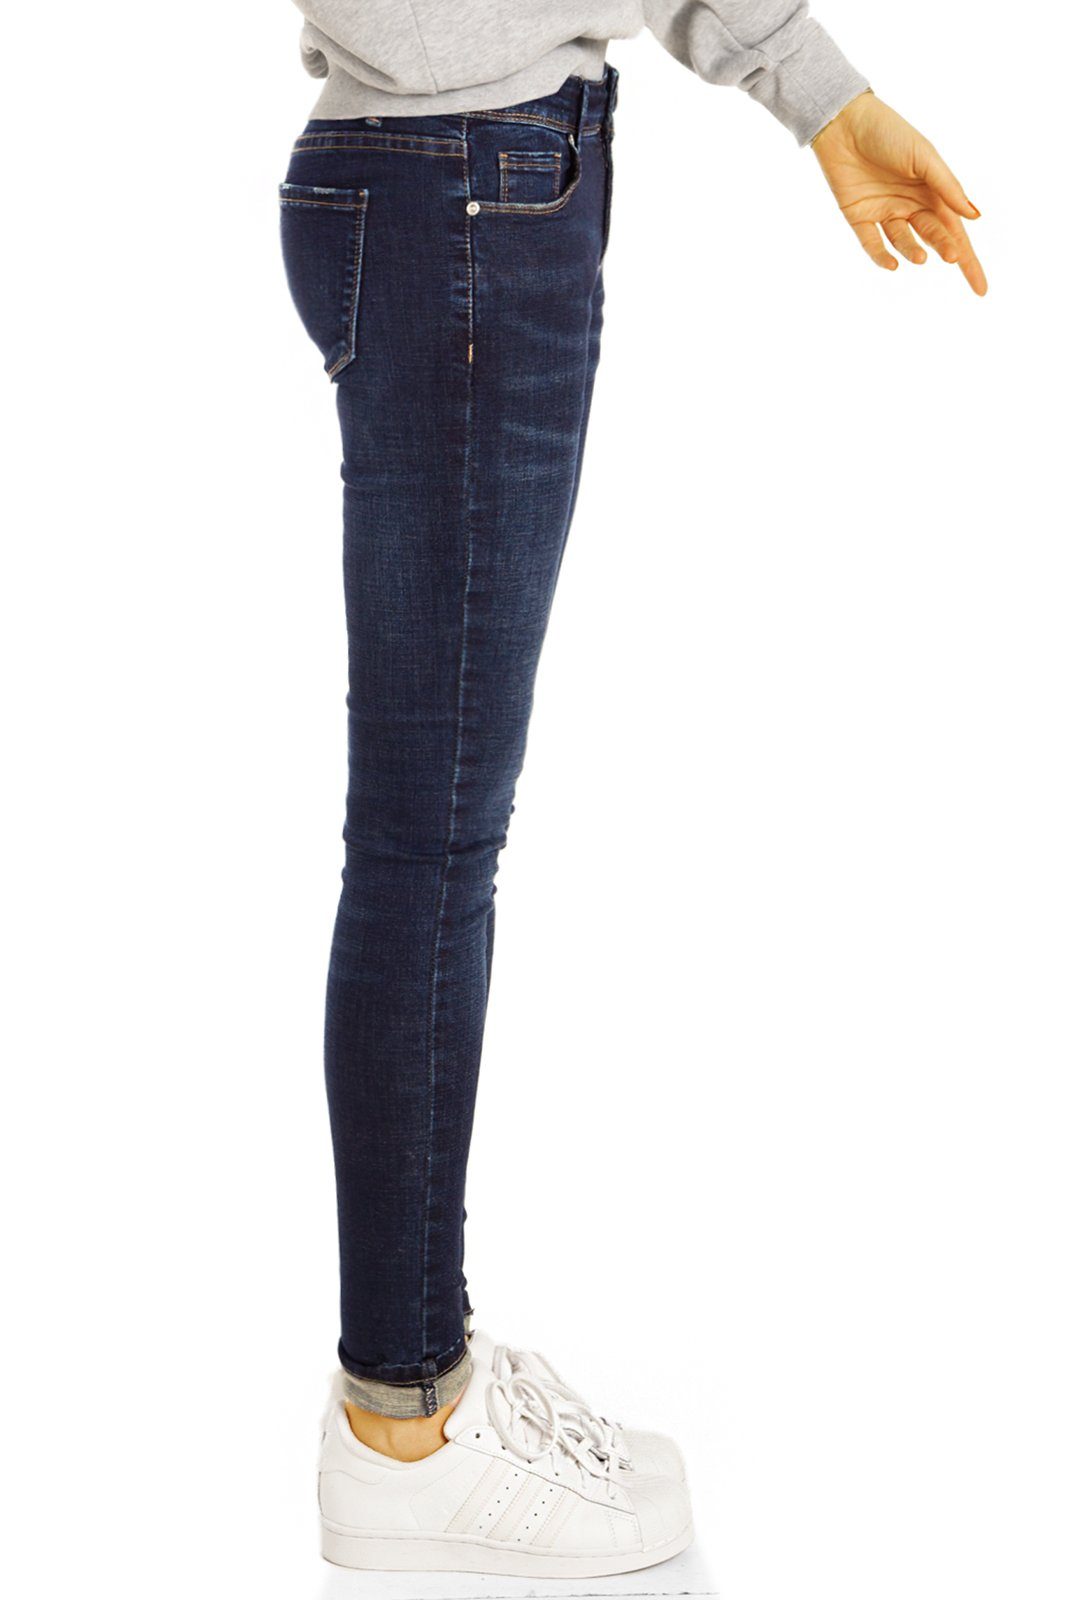 stretch Fit Jeans Röhrenjeans Skinny-fit-Jeans denim Skinny Damen Stretch-Anteil, Hüftjeans j15k-2 - mit be 5-Pocket-Style Hosen styled -